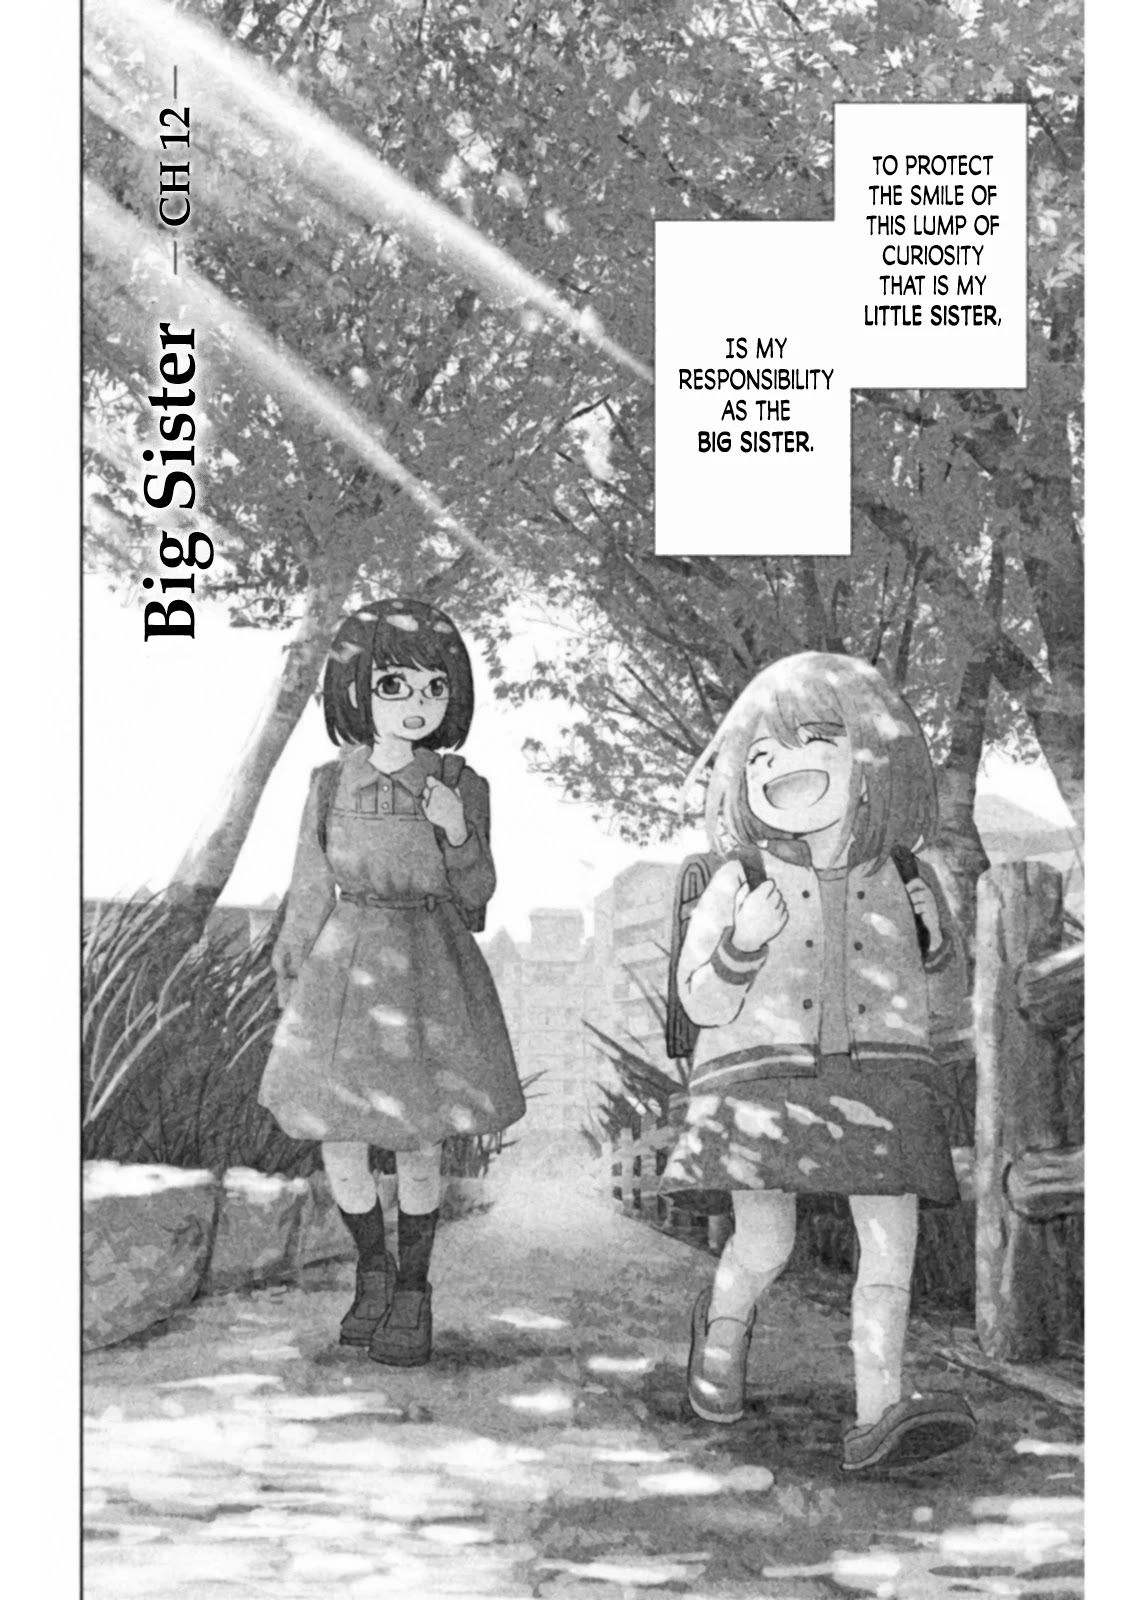 Mitarai-Ke, Enjou Suru - Page 2